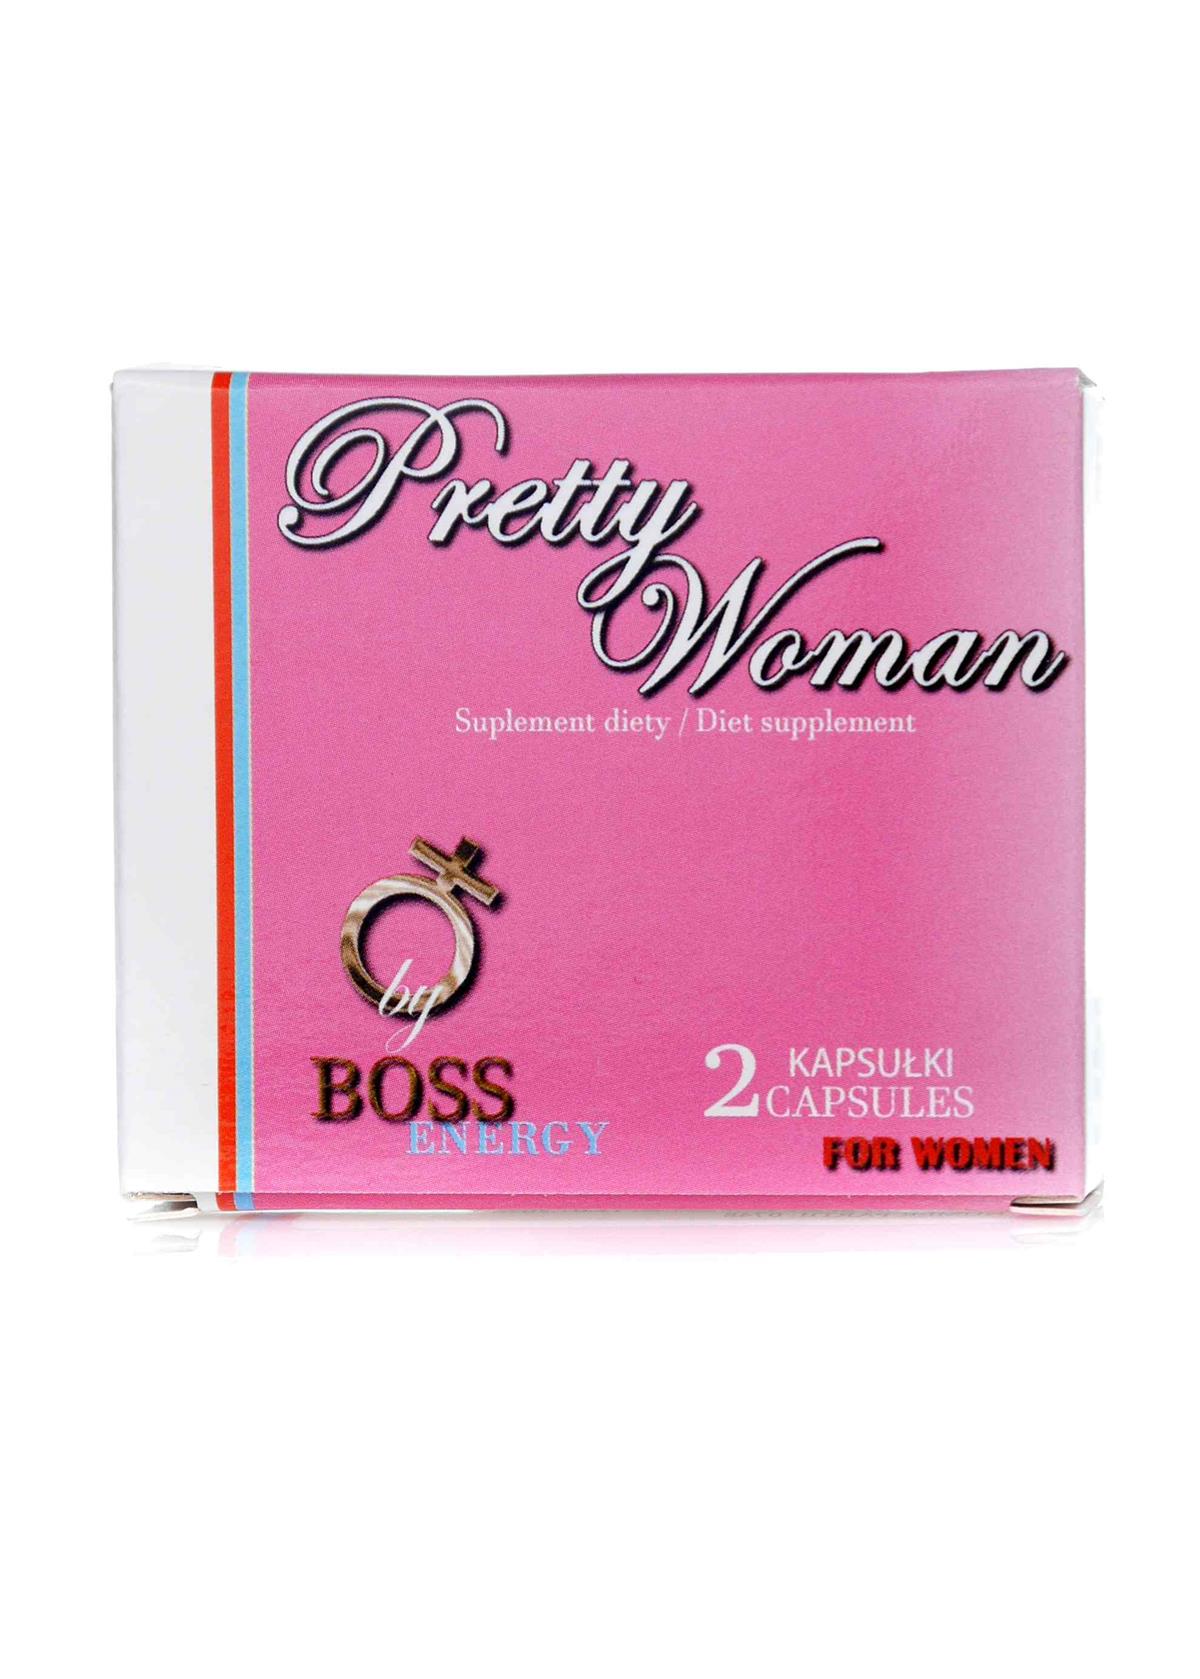 Bossoftoys - Diet supplement - Pretty Woman 2 pcs - Gets higher libido -  45-00004